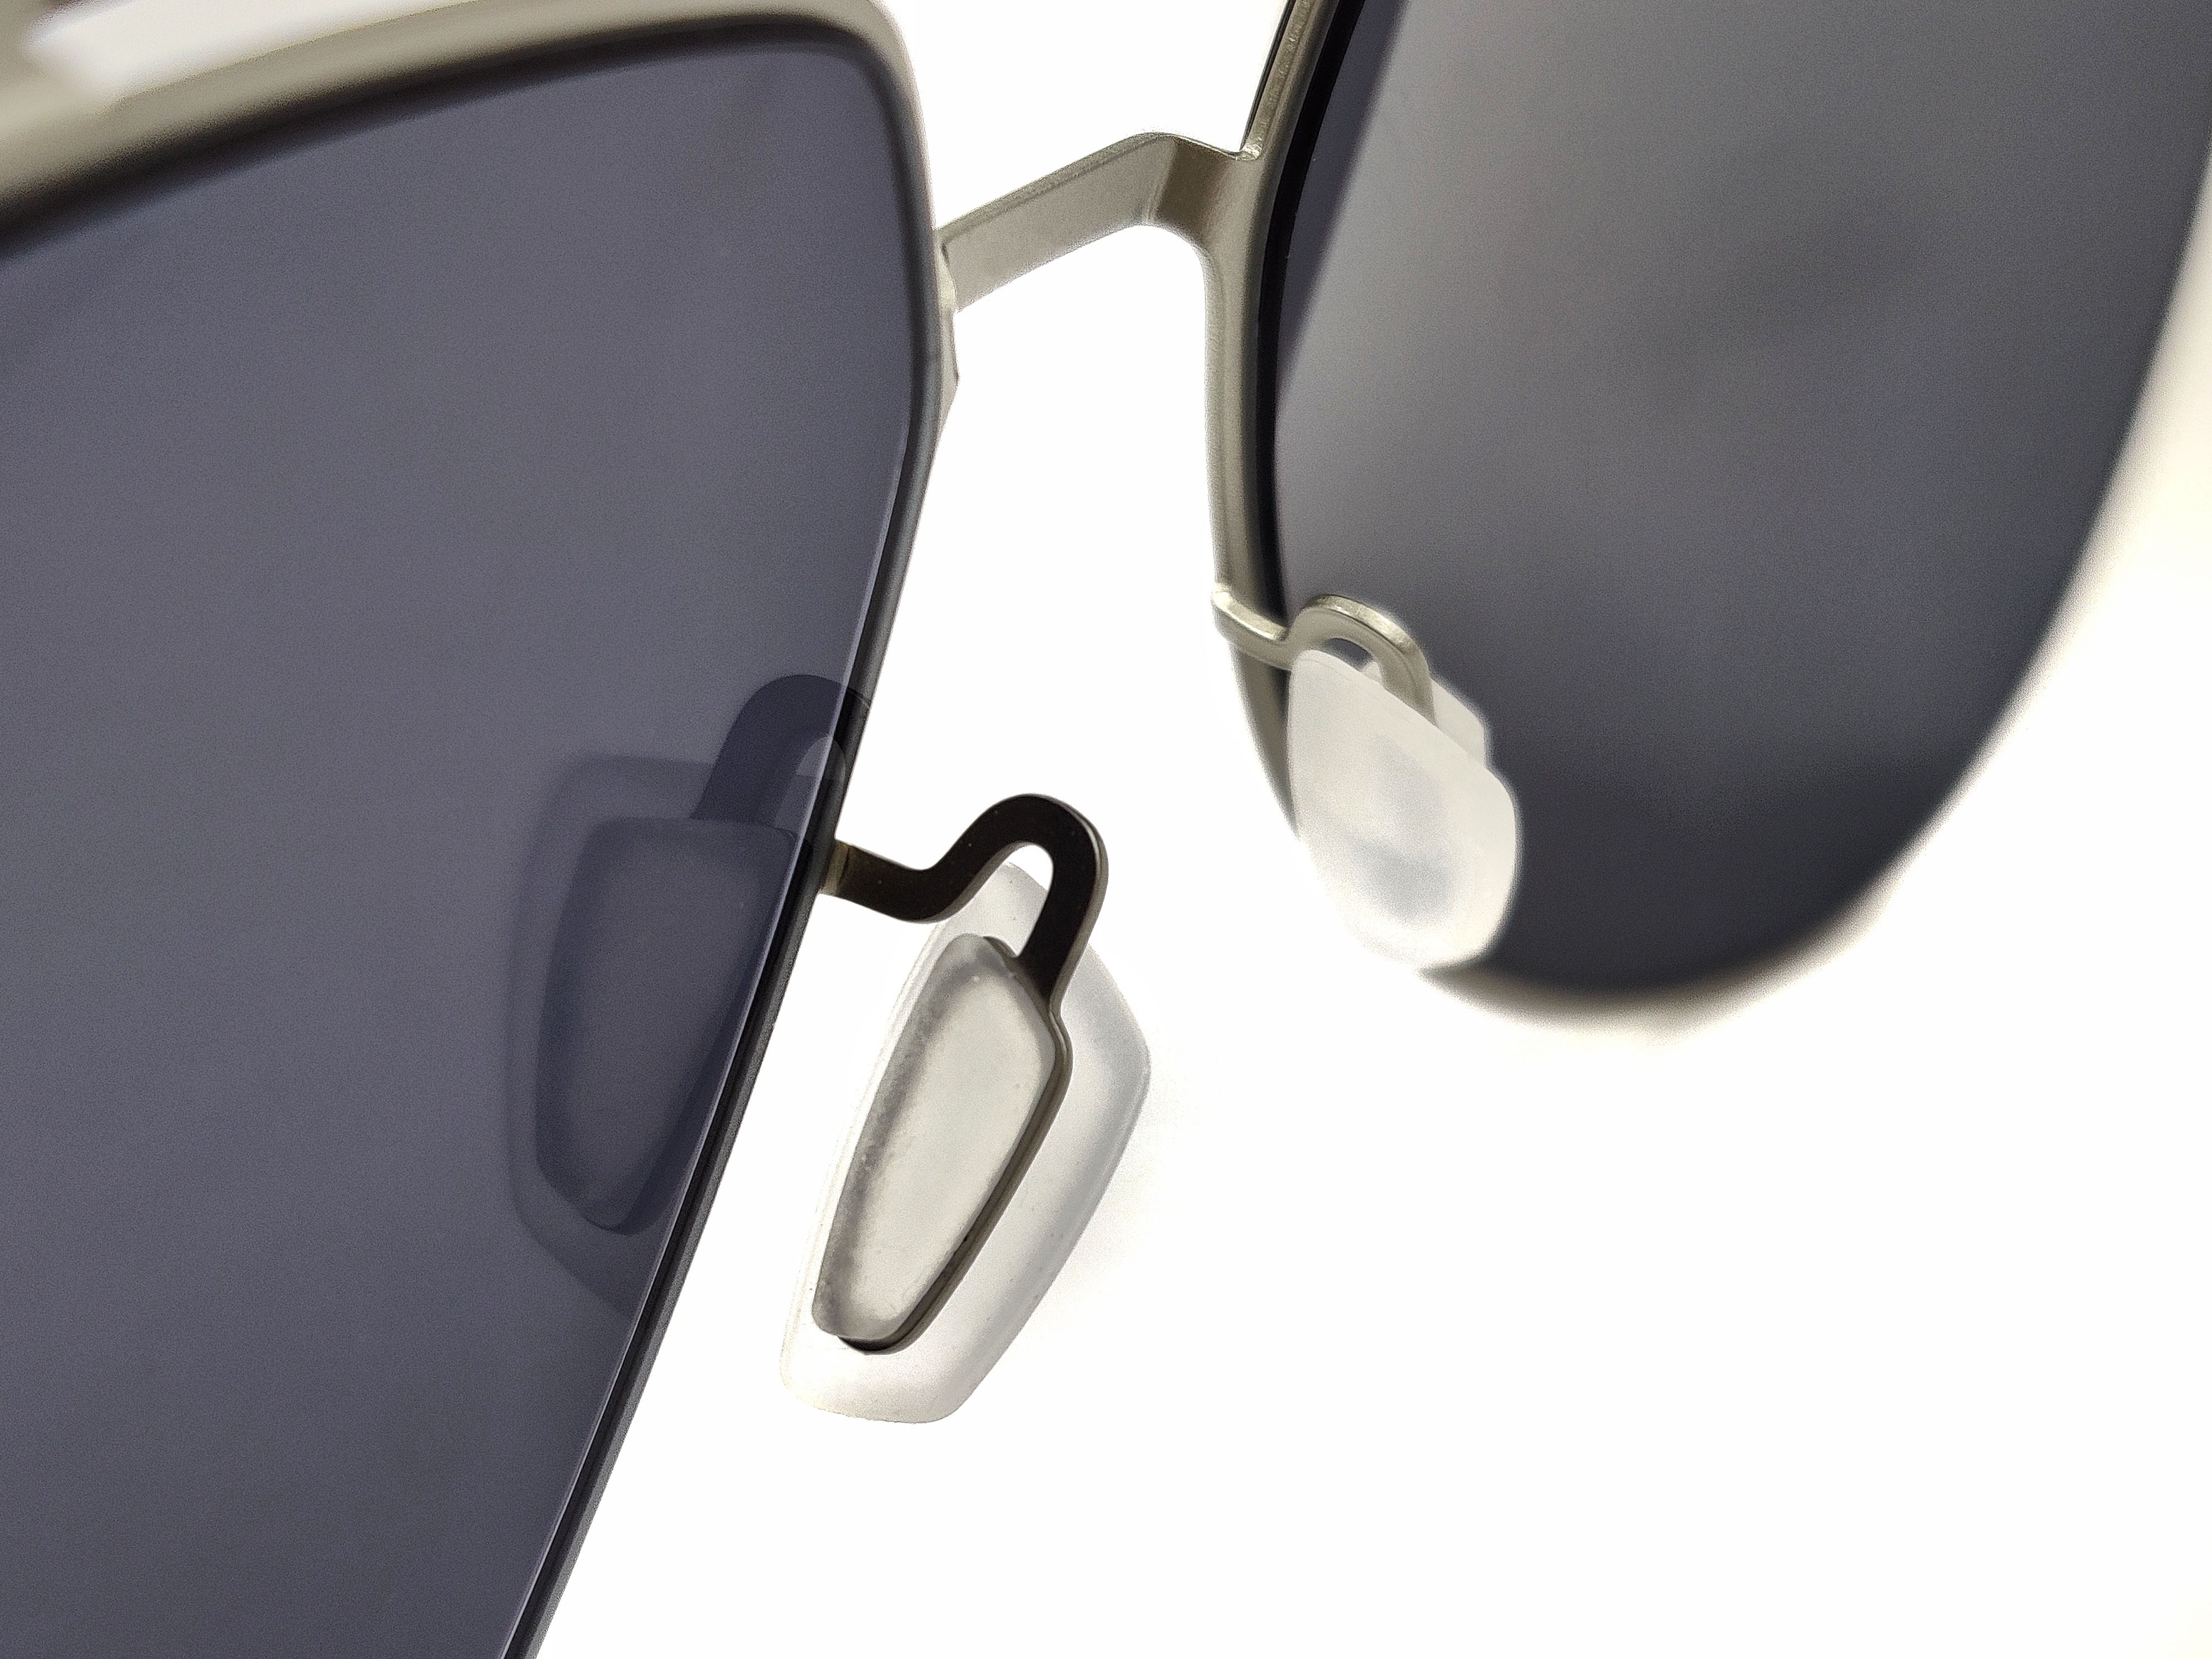 Oval Polarized Sunglasses Custom Sunglasses Manufacturers Custom Printed Sunglasses